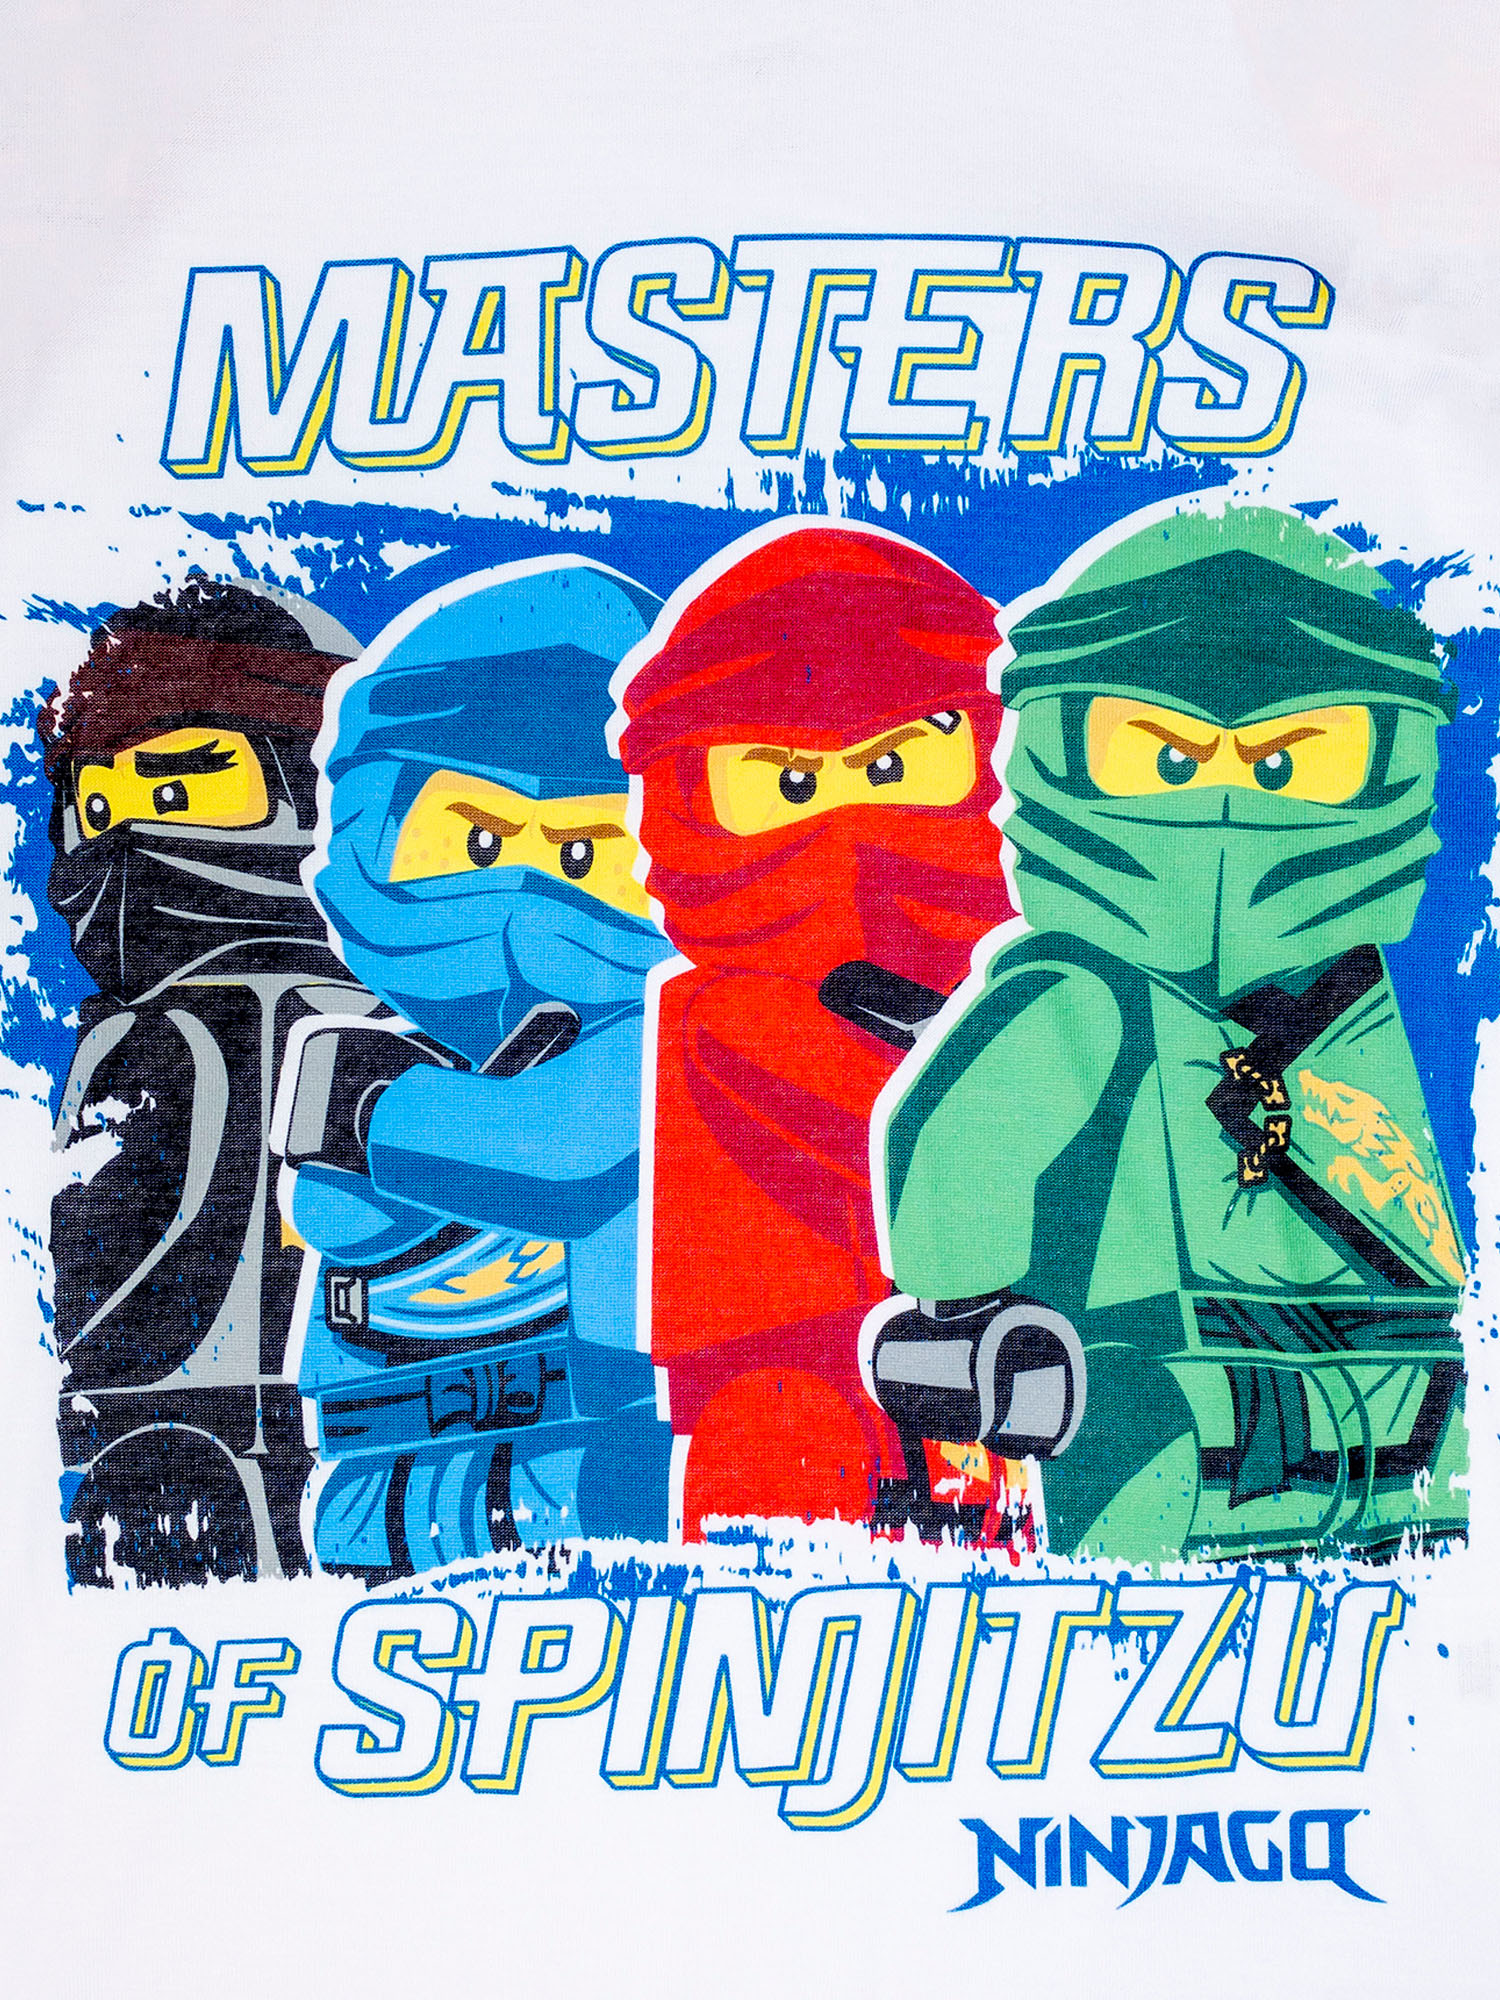 Lego Ninjago Boys Hooded Long Sleeve Top and Long Pants, 2-Piece Pajama Sleep Set, Sizes 4-12 - image 5 of 5